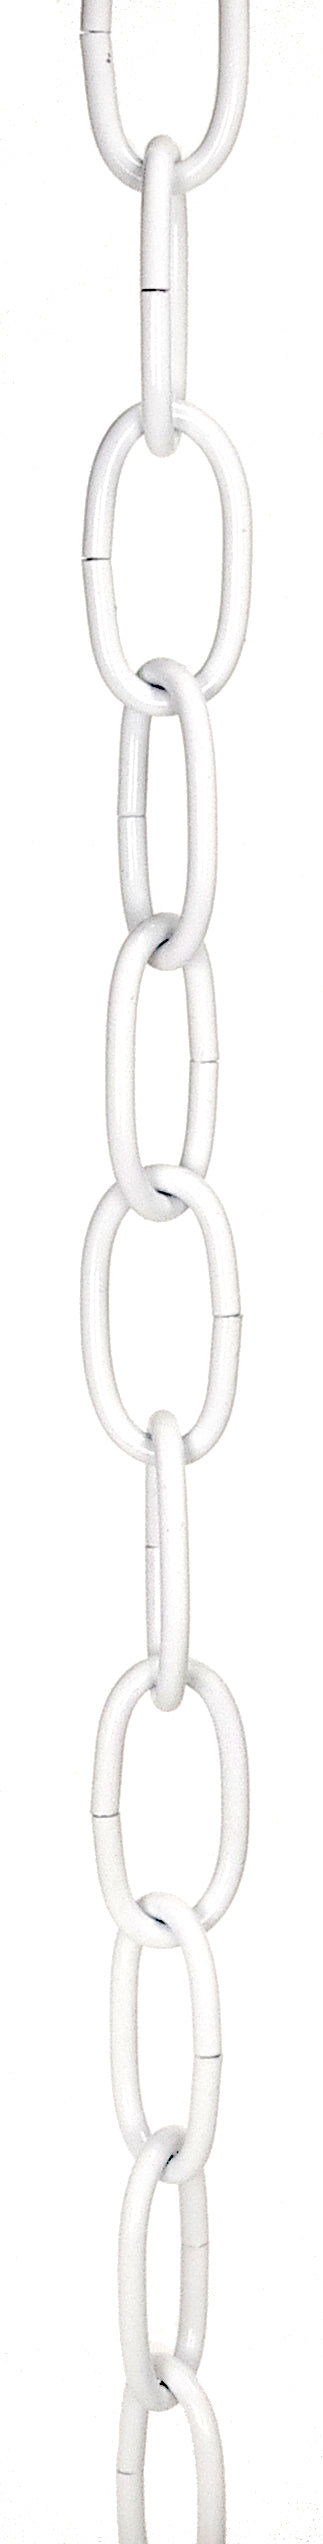 SATCO/NUVO 8 Gauge Chain White Finish 1 Yard Len 11/2 Inch Link Len 7/8 Inch Link Wide 1/8 Inch Thick 100 Yard Per Carton 35 Pounds Maximum (79-458)